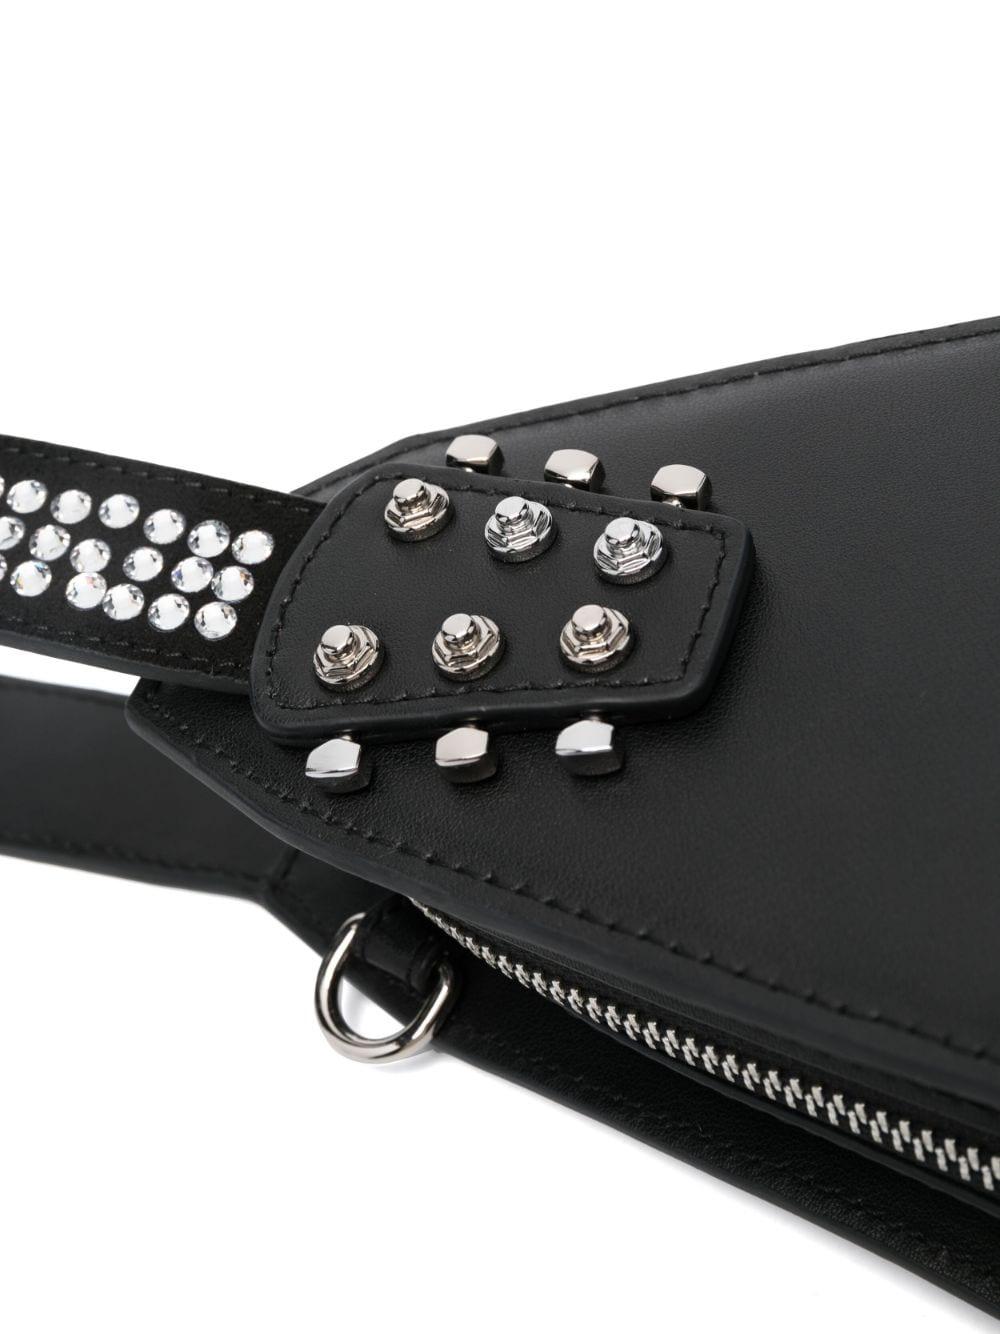 Karl Lagerfeld K/guitar Leather Clutch Bag in Black